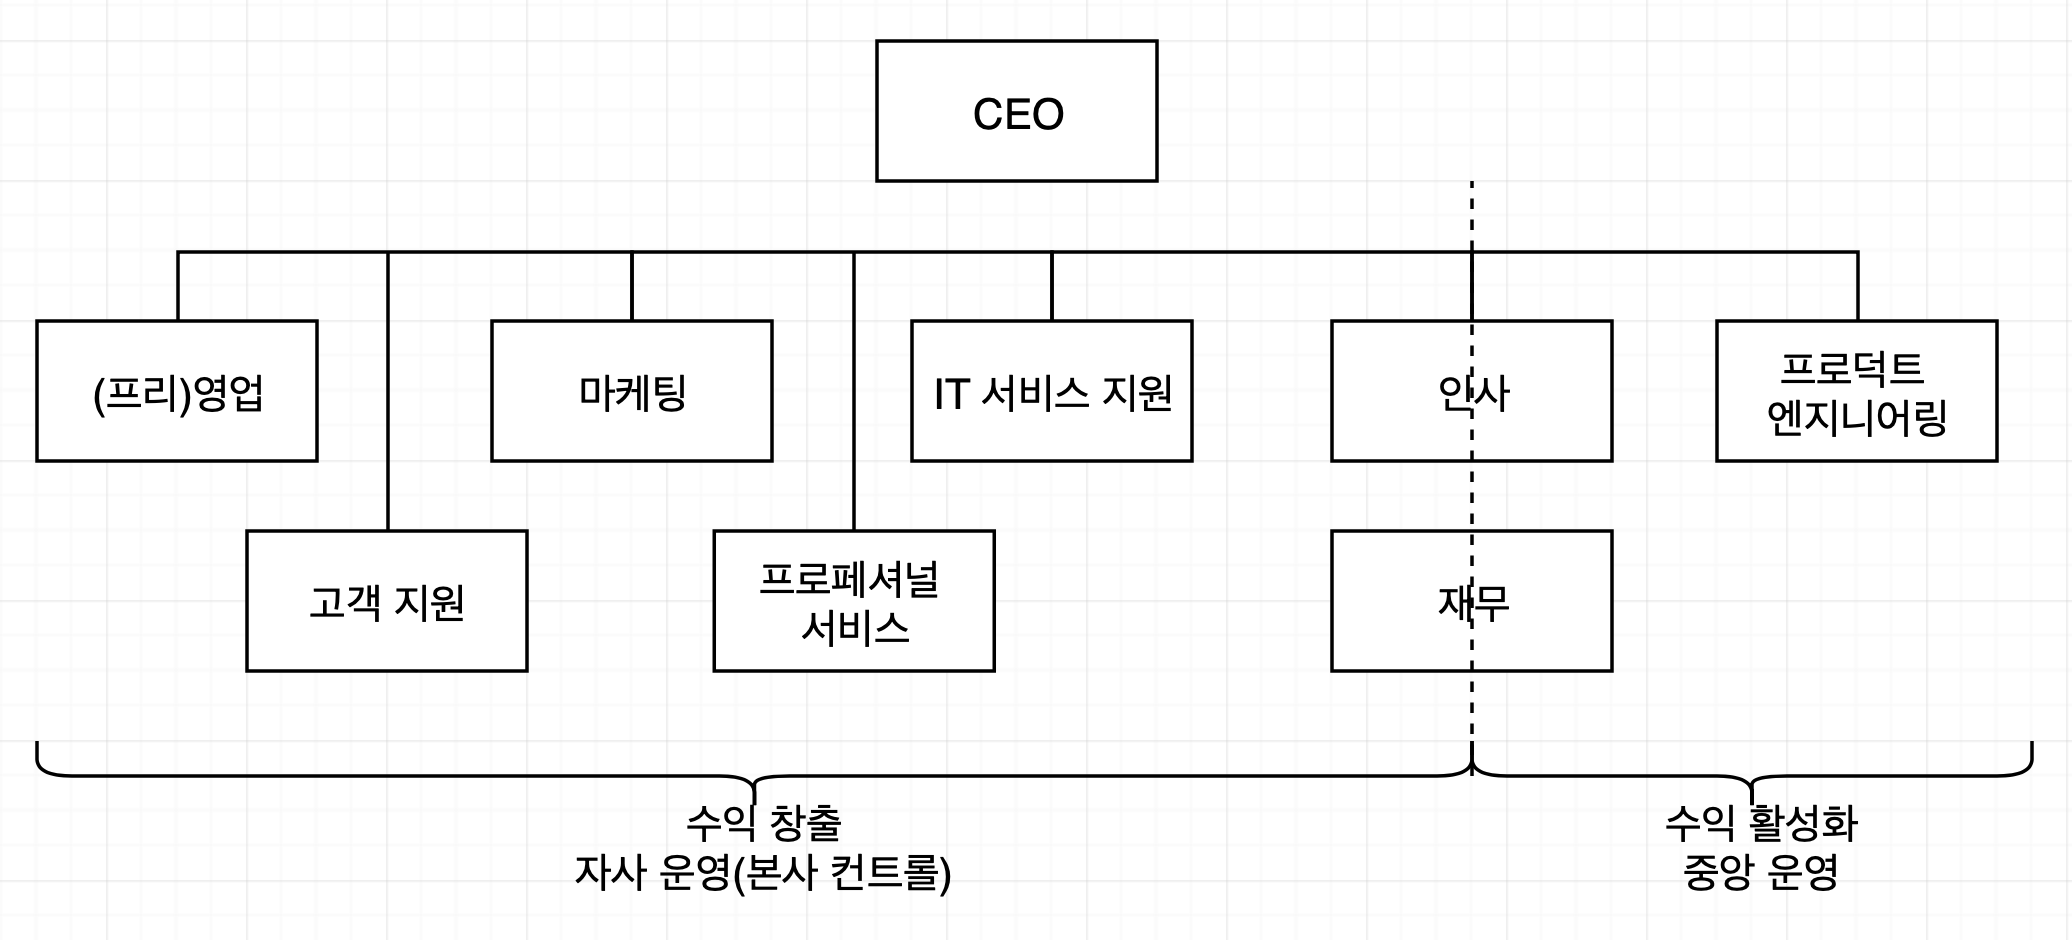 corporation structure